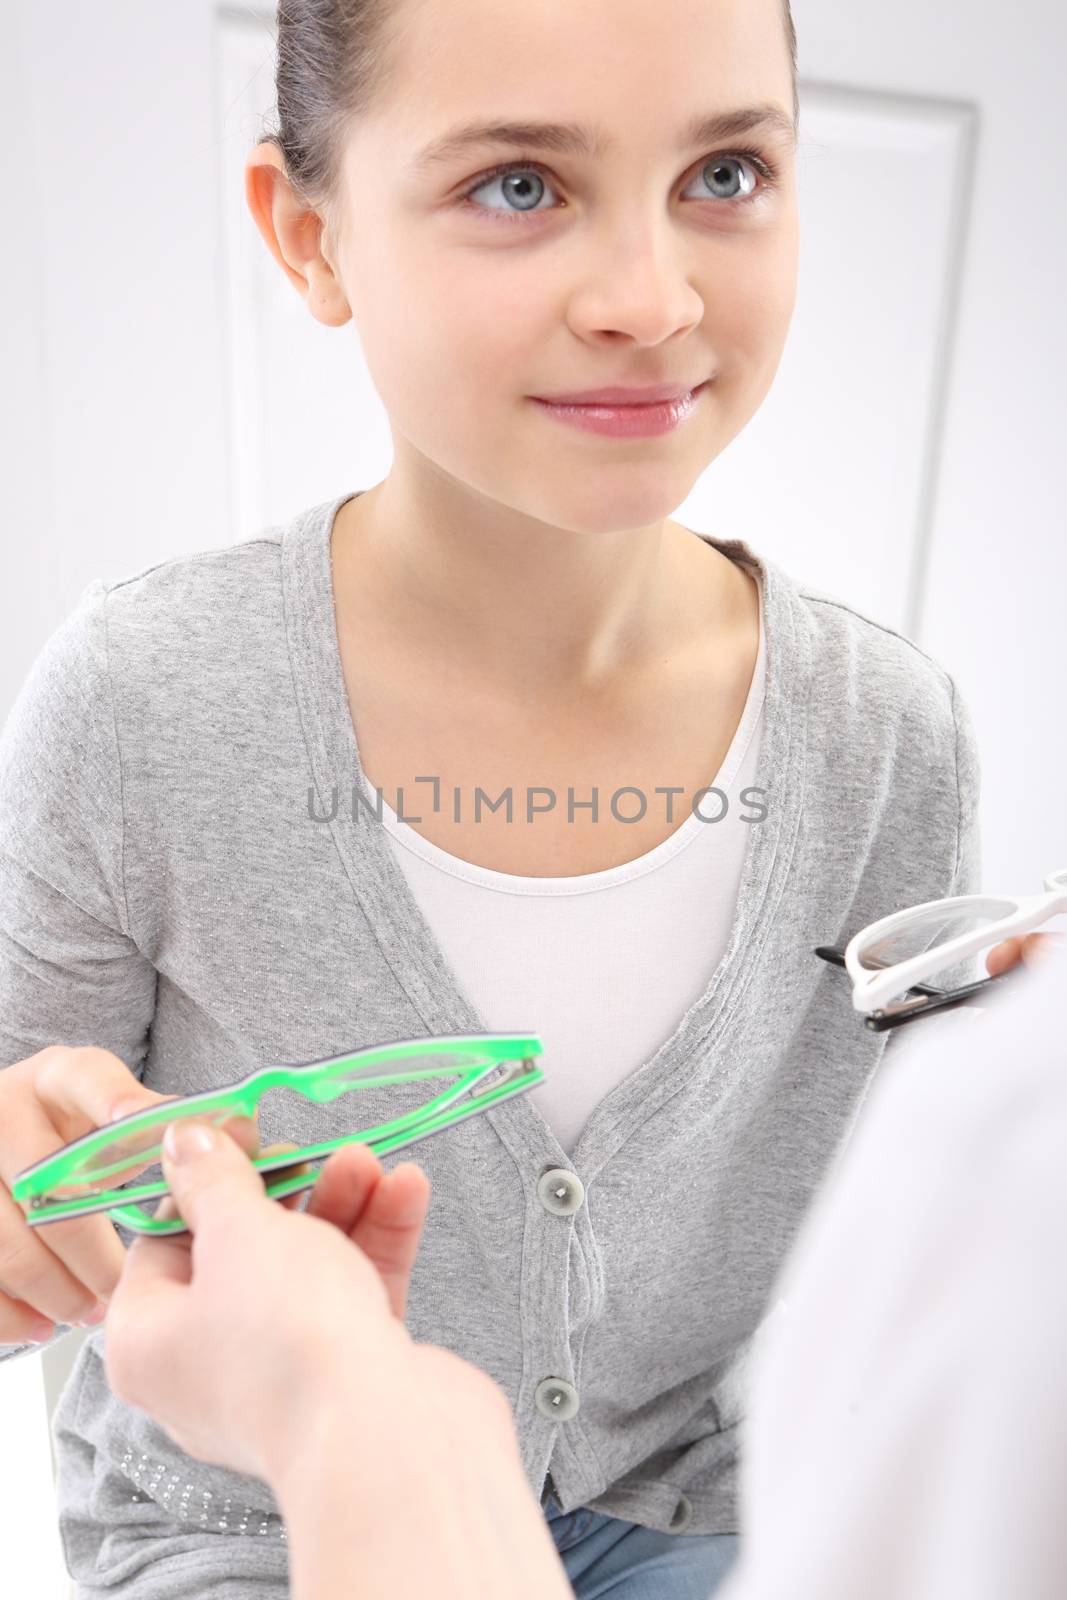 Child an ophthalmologist by robert_przybysz